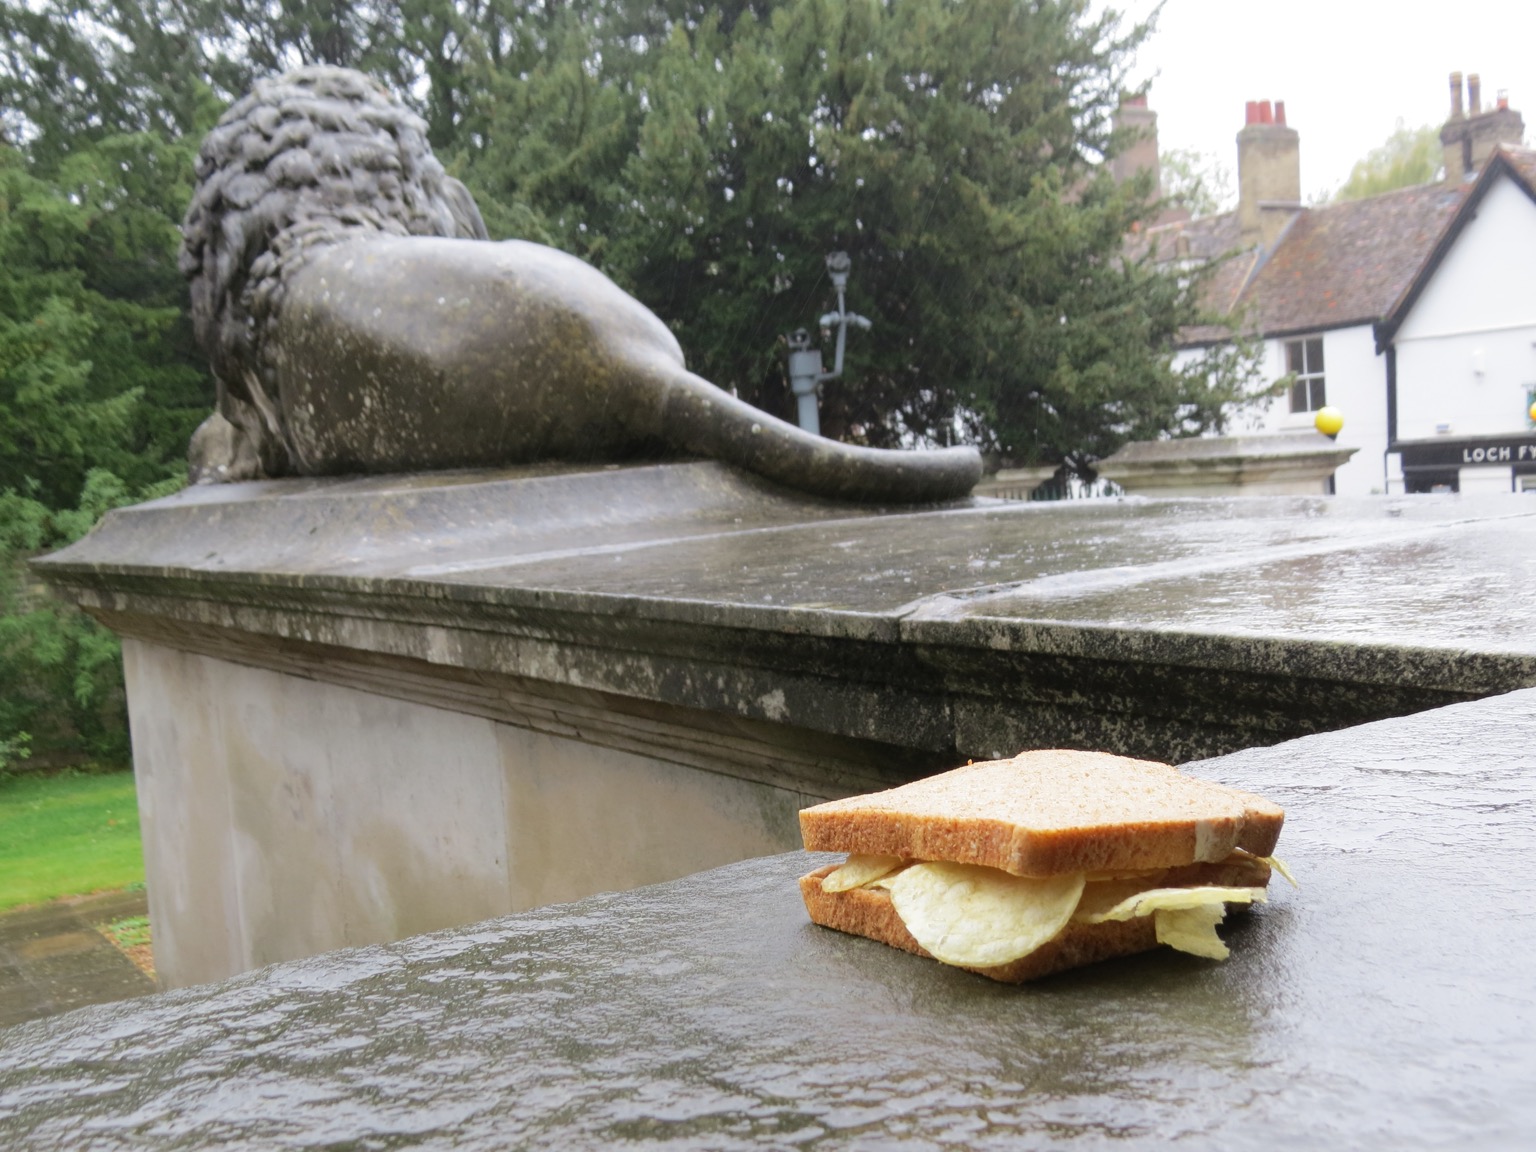 Brown crisp sandwich in front of a lion statue